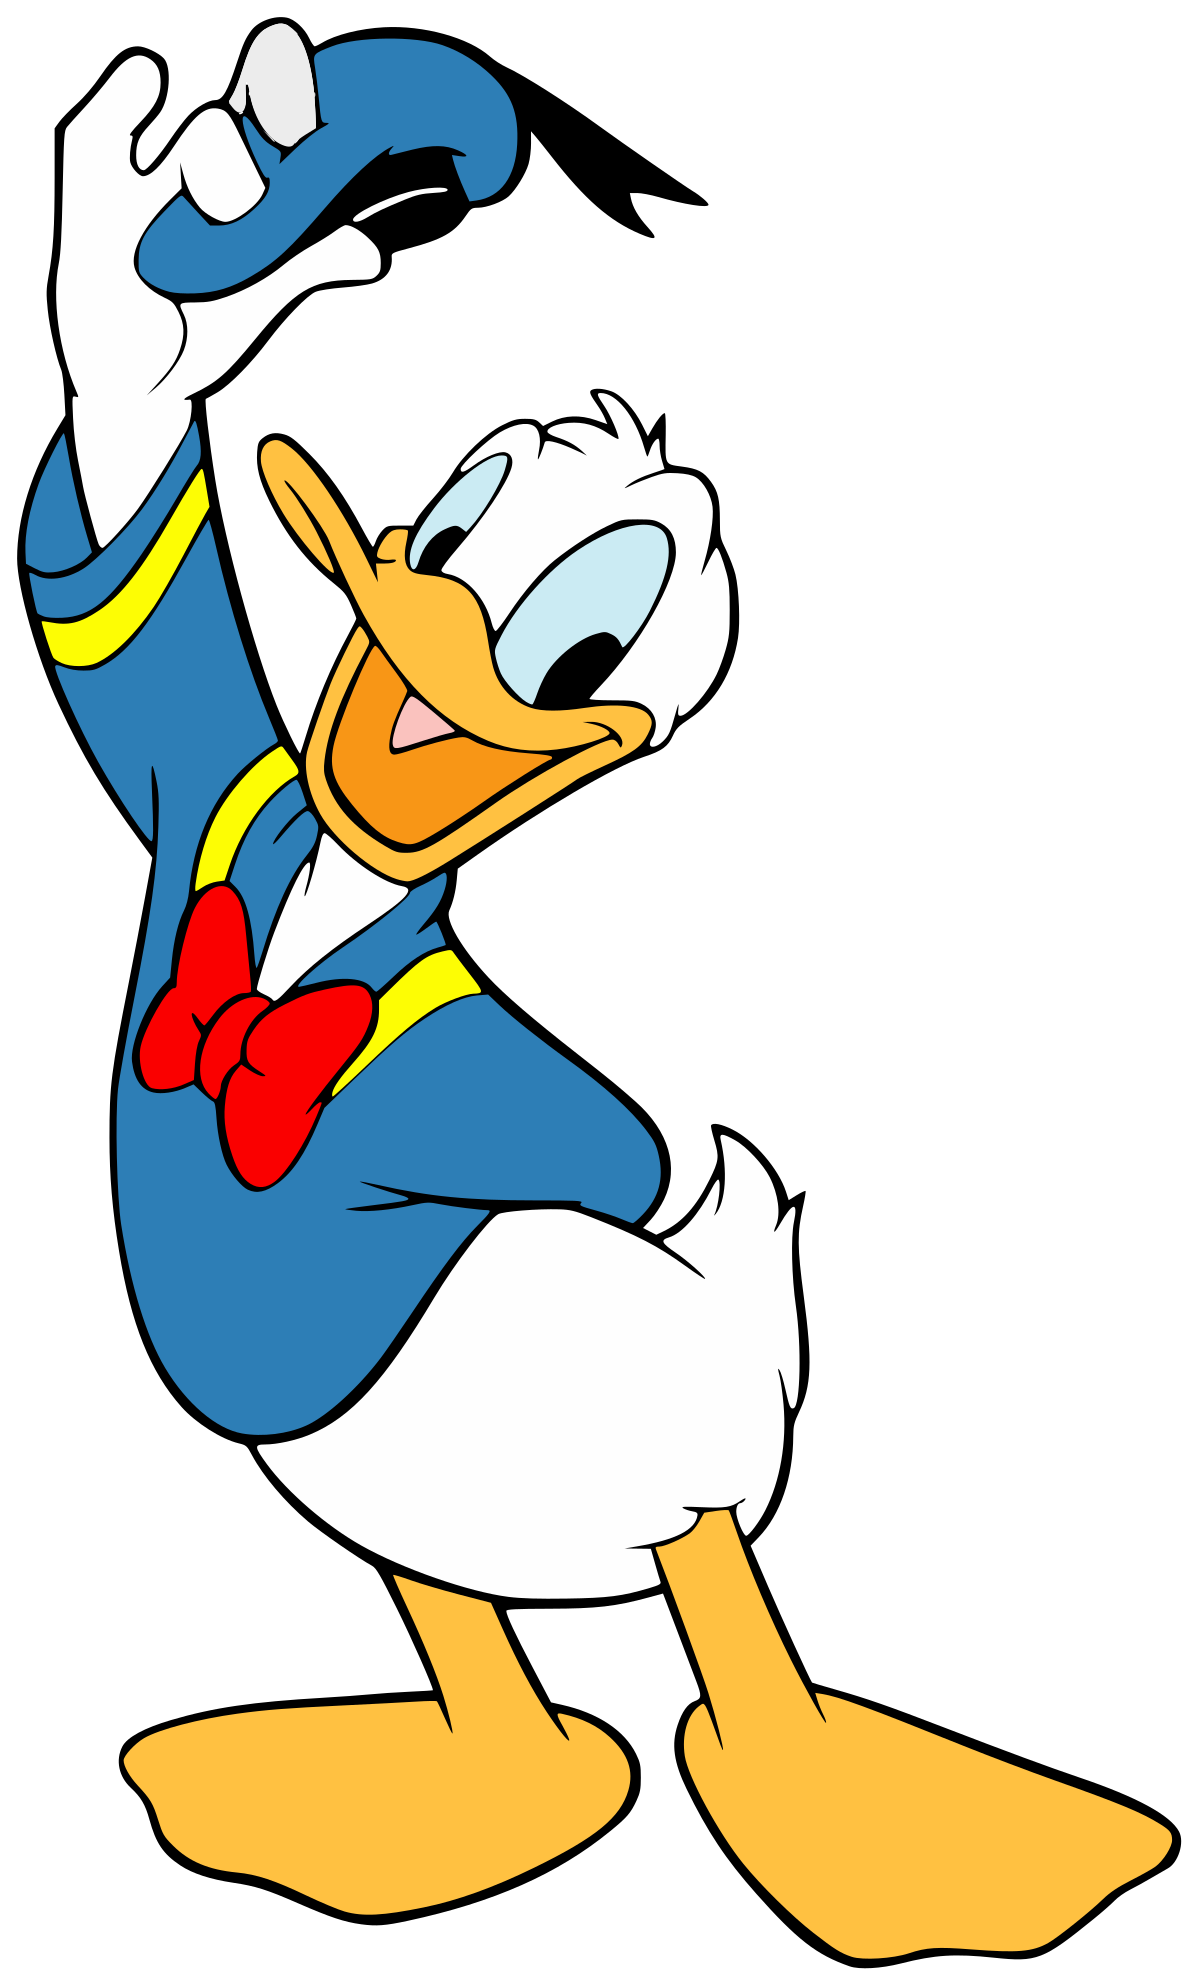 Donald Duck - Wikipedia